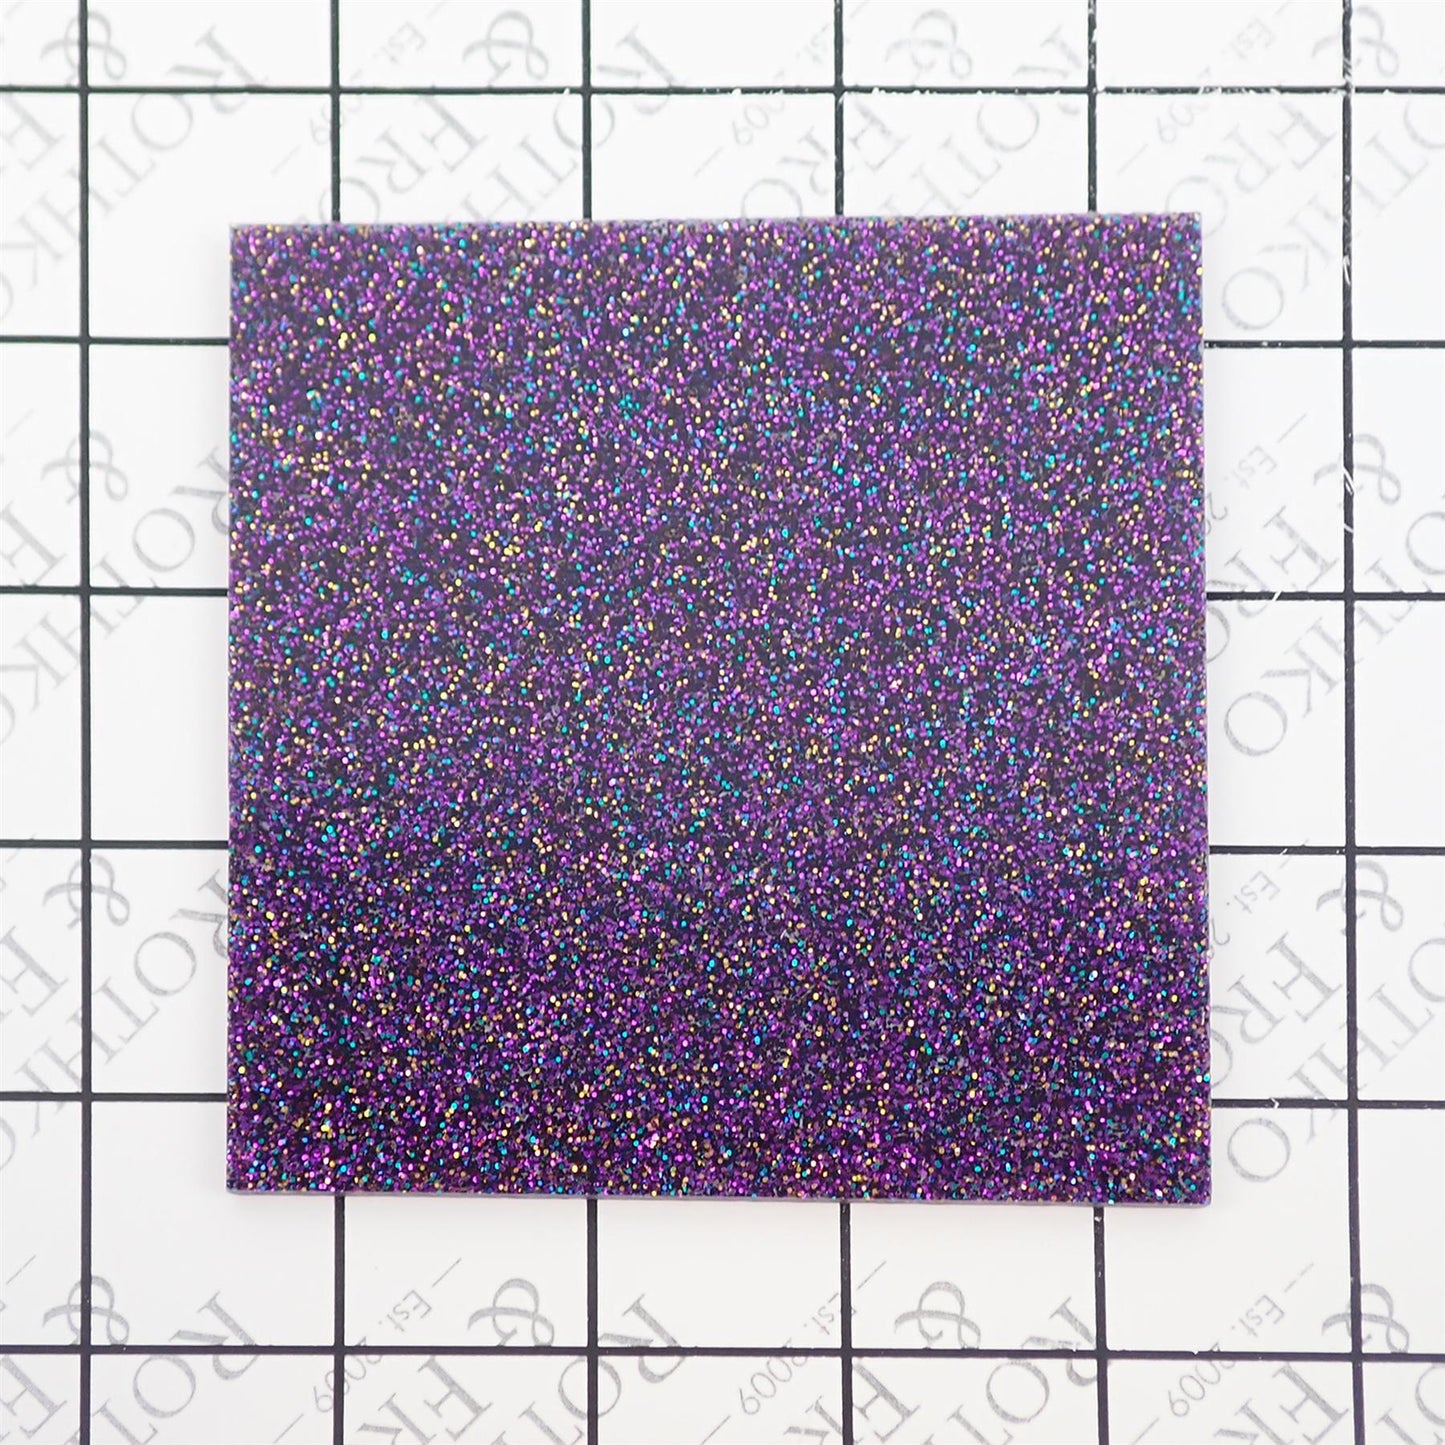 Incudo Purple 2-Sided Holographic Glitter Acrylic Sheet - 300x200x3mm (11.8x7.87x0.12")